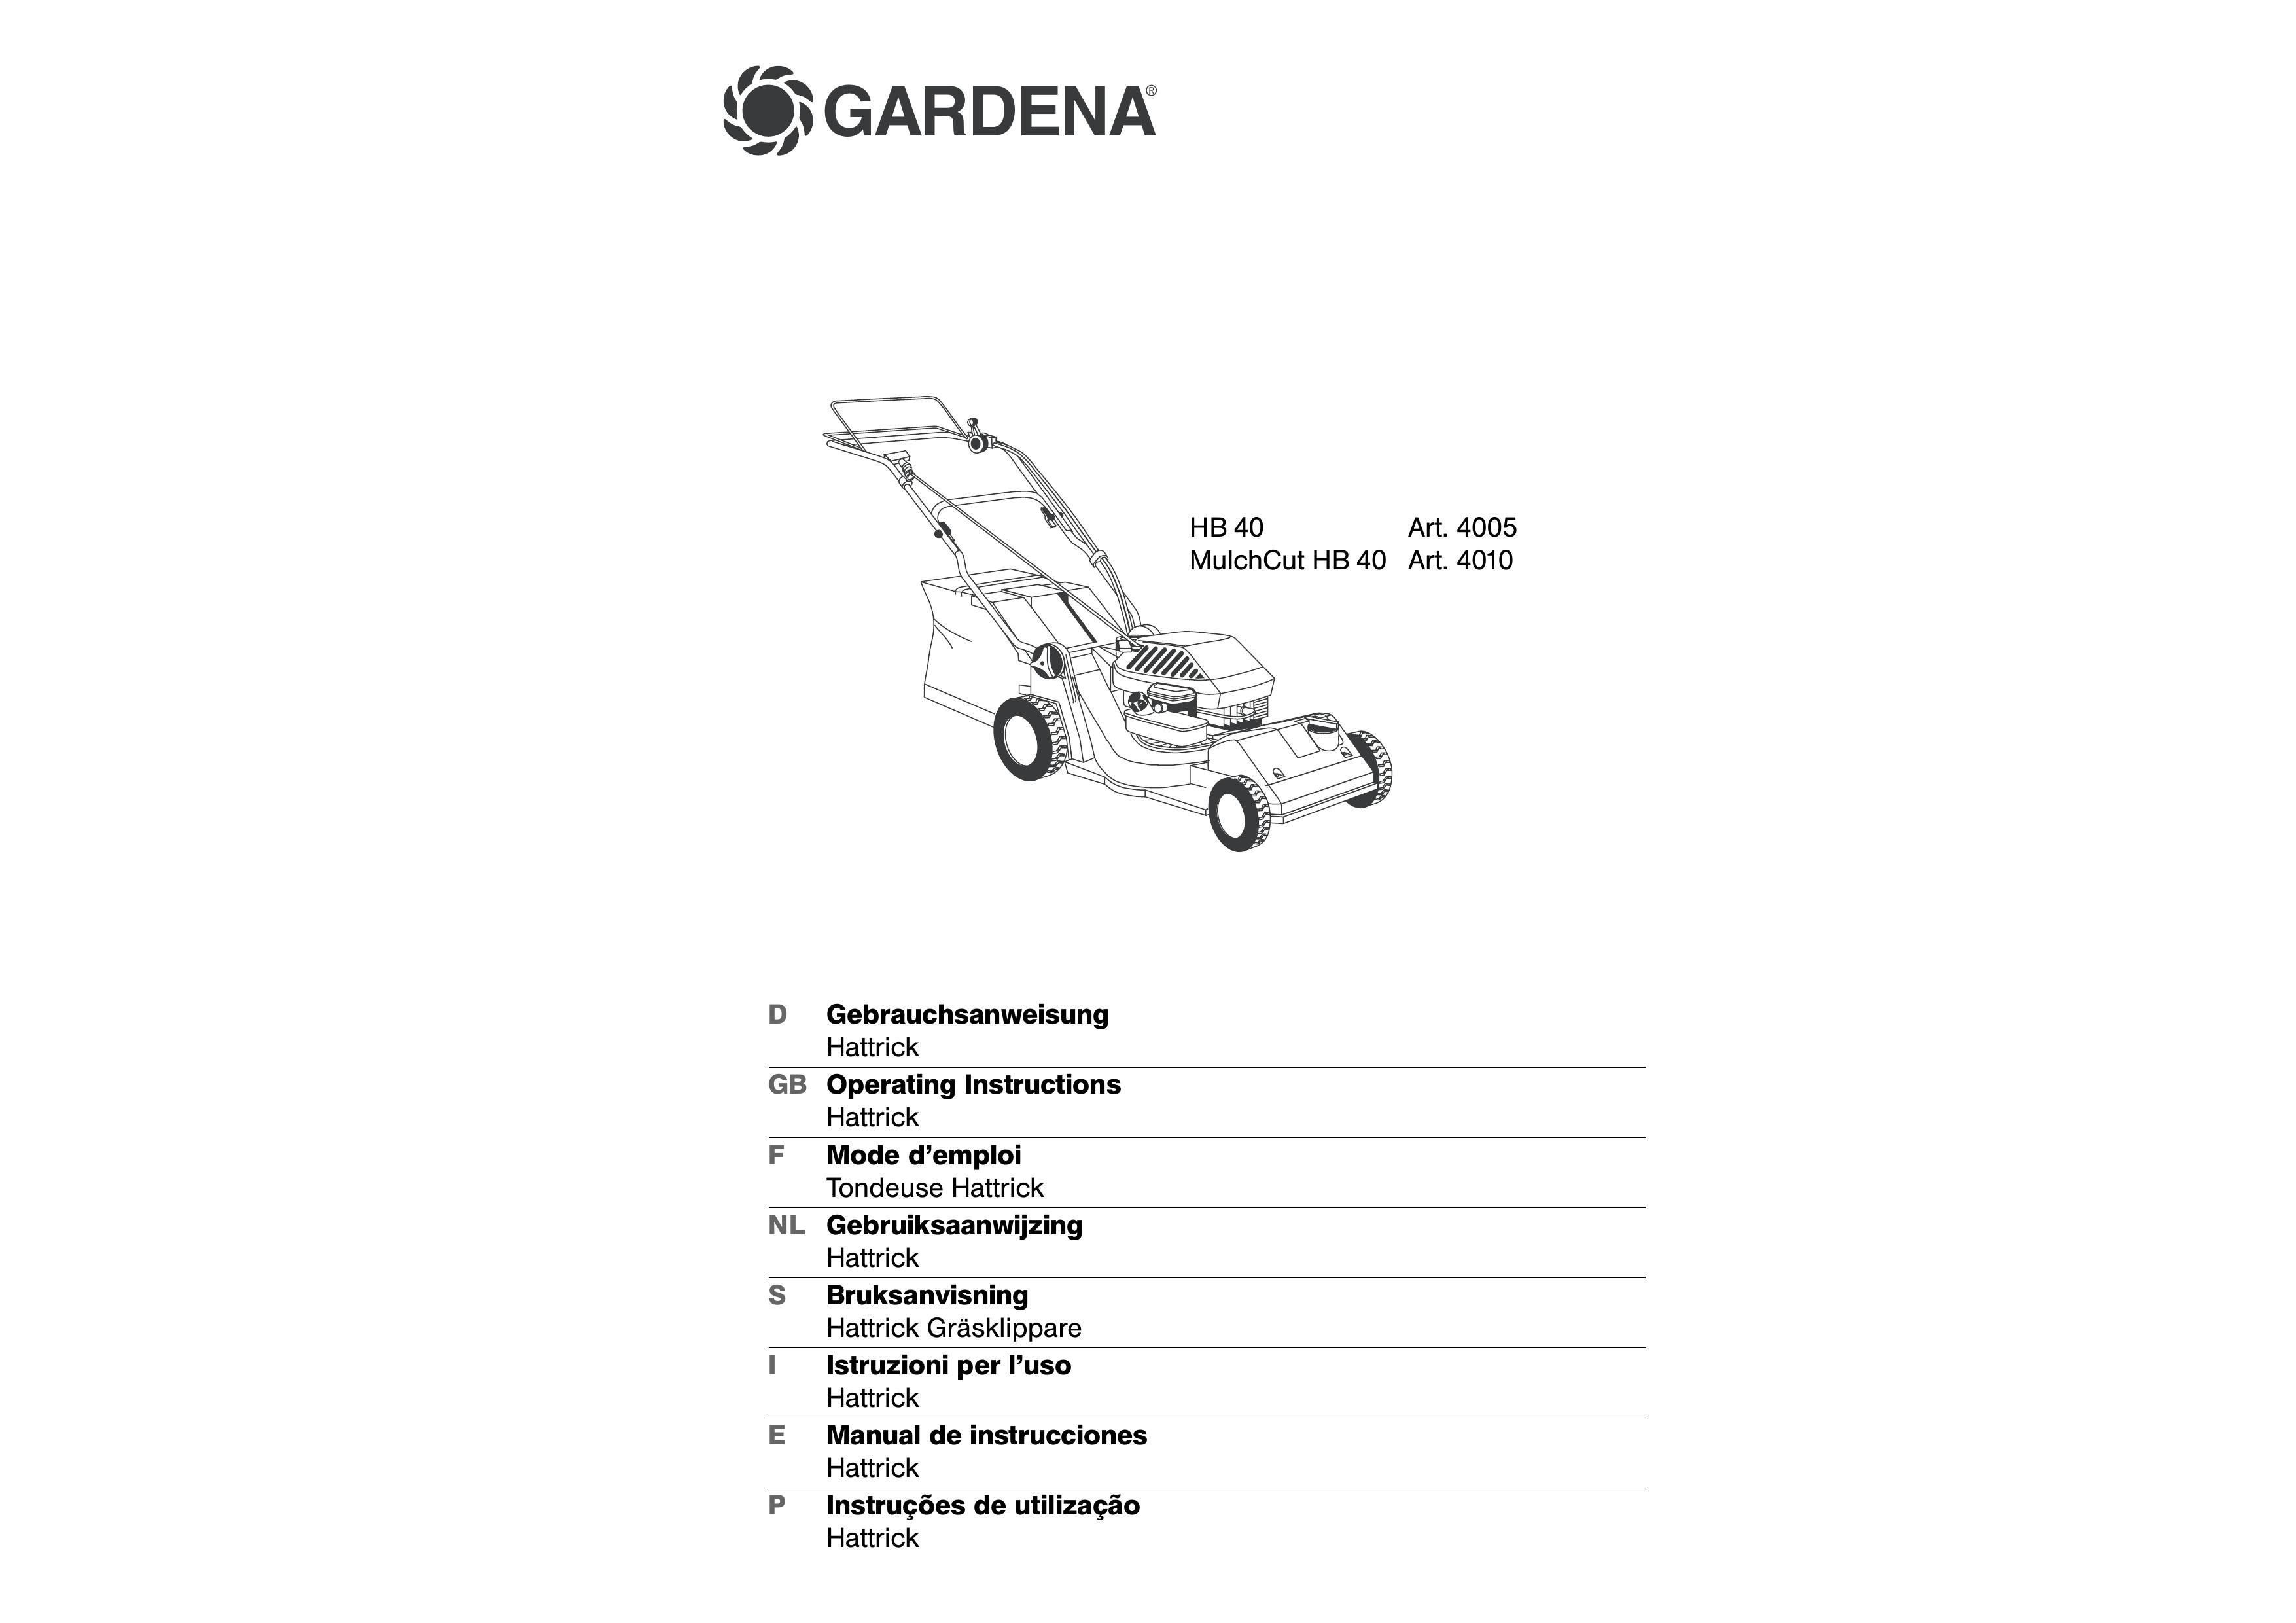 Gardena Art. 4005 Lawn Mower User Manual